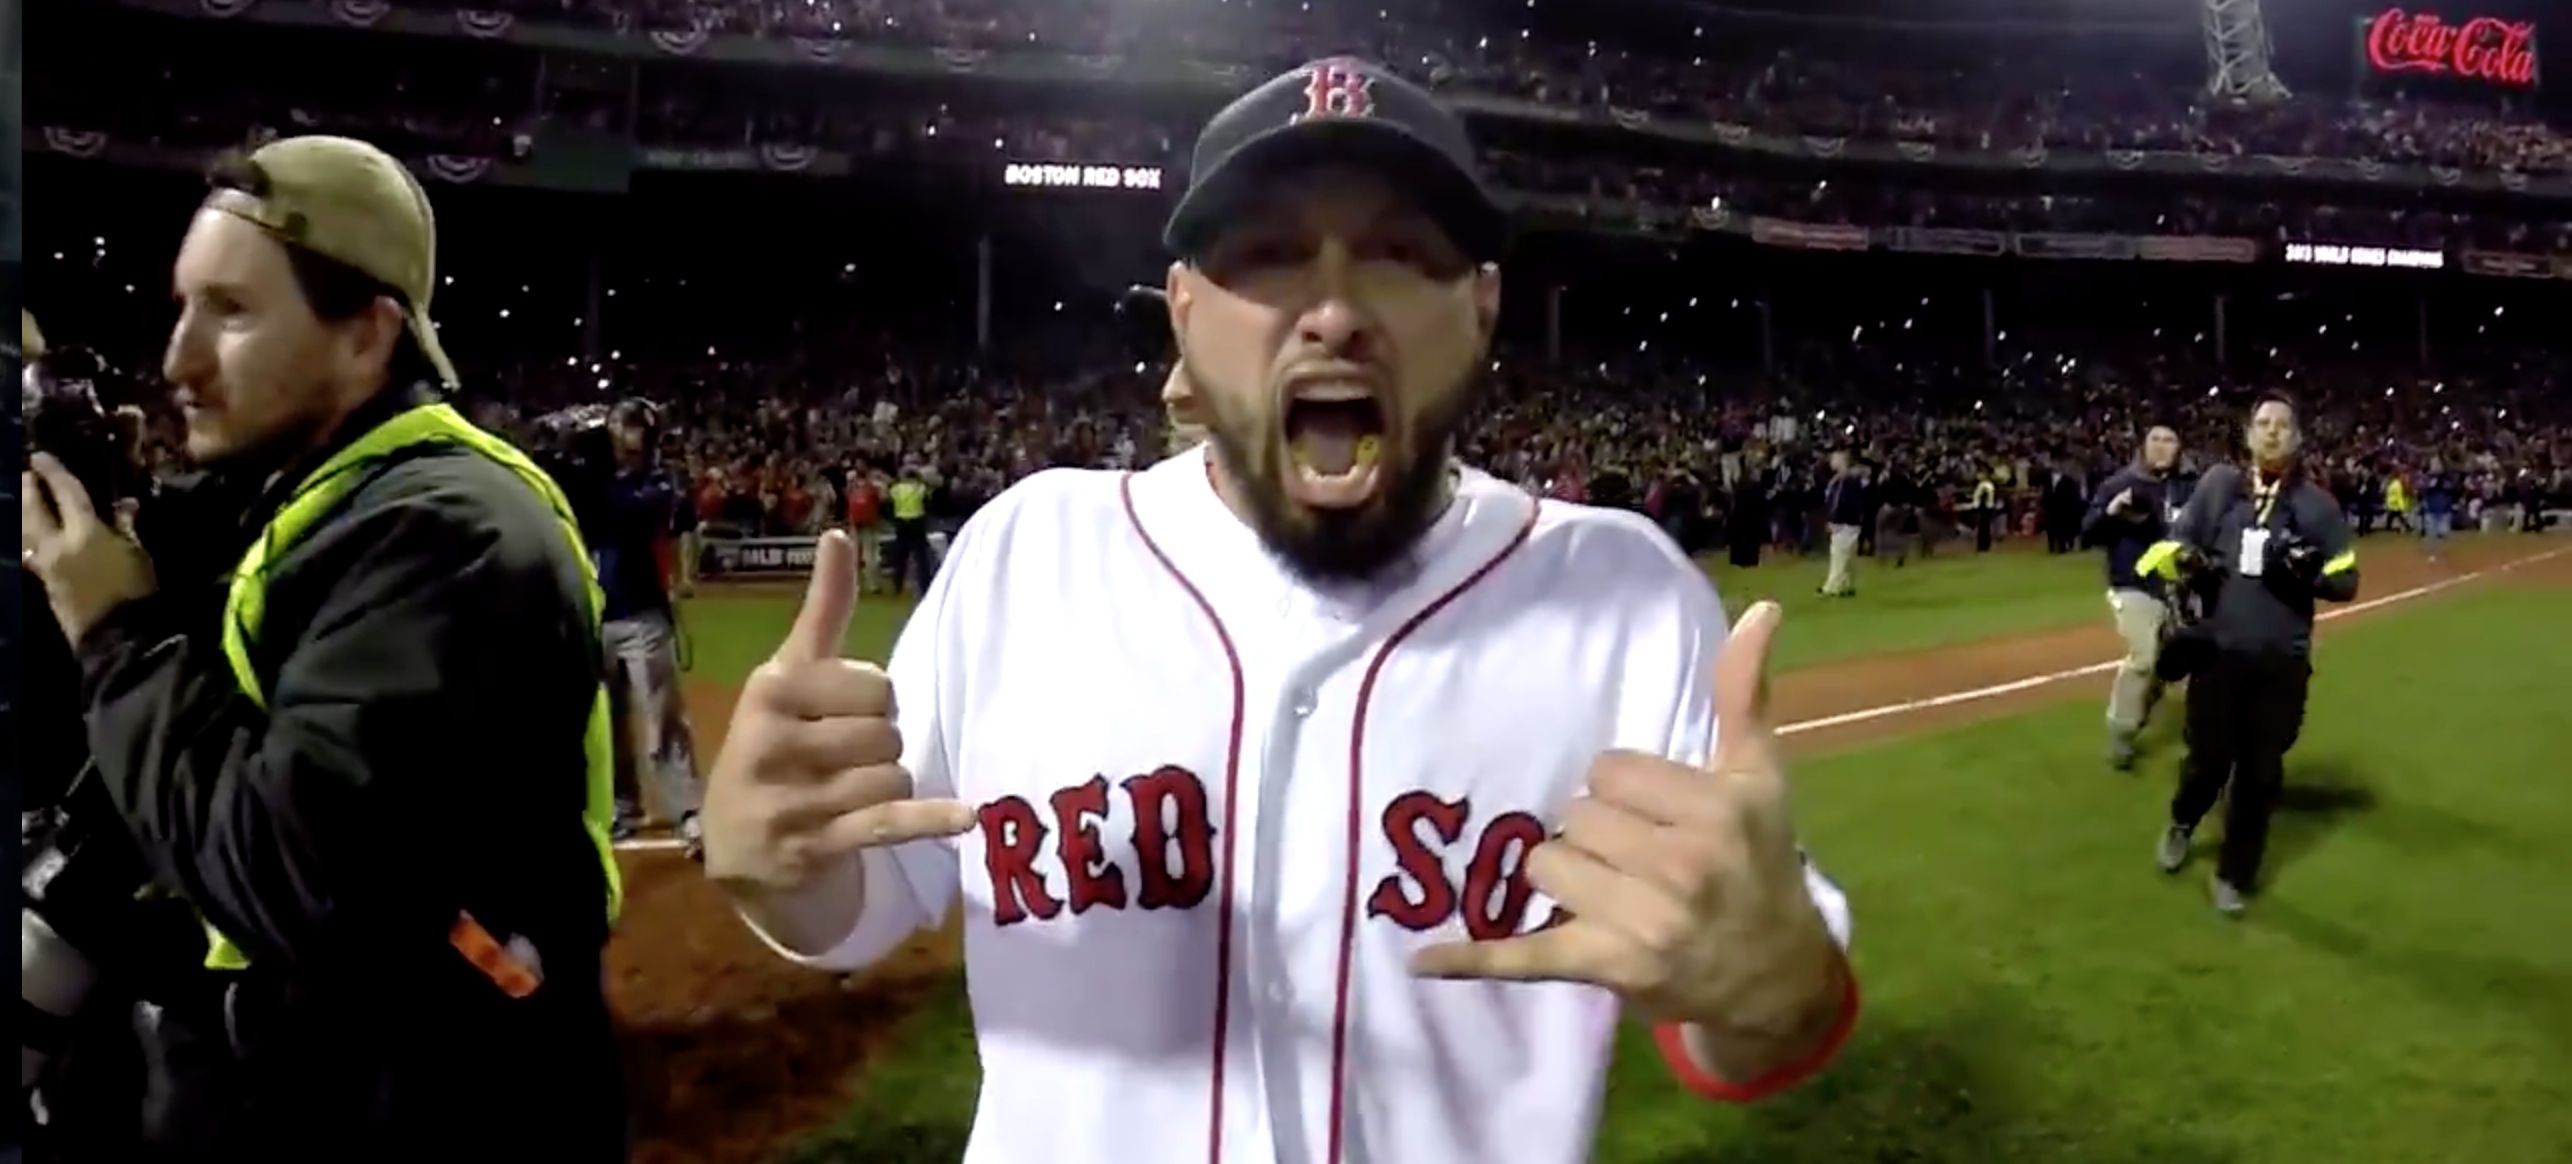 GoPro Boston Red Sox